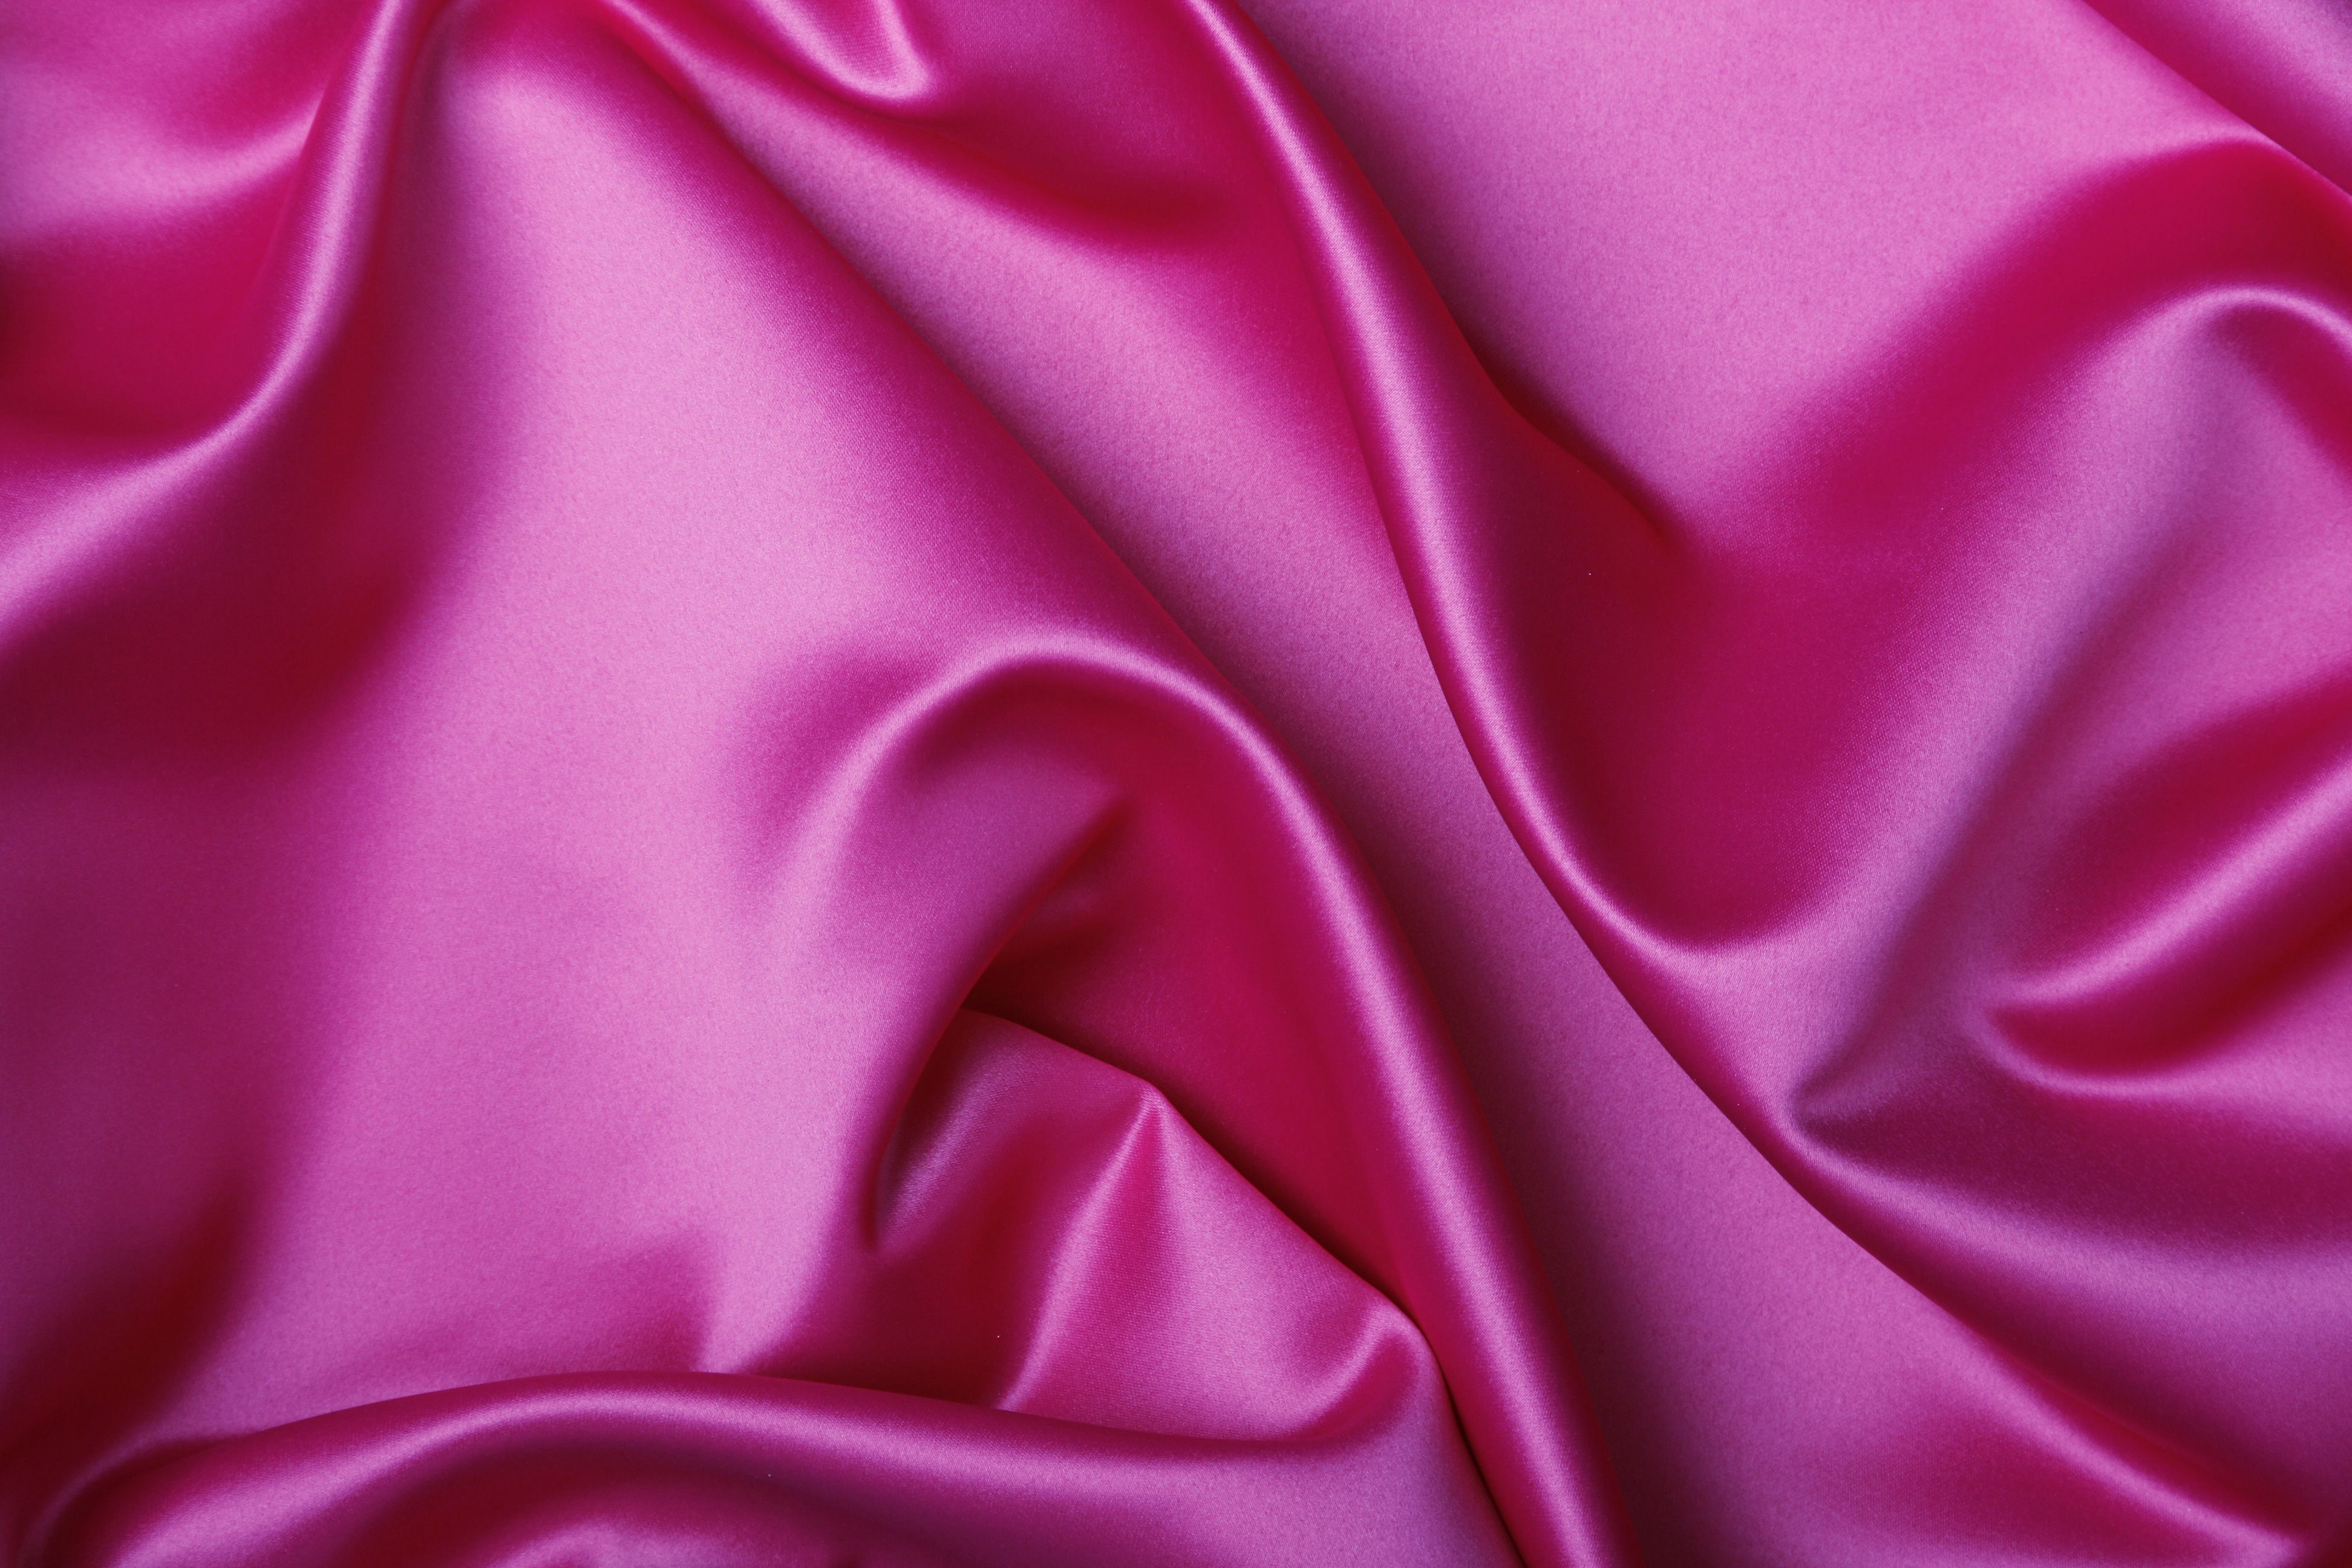 Pink Satin Background Quality Image